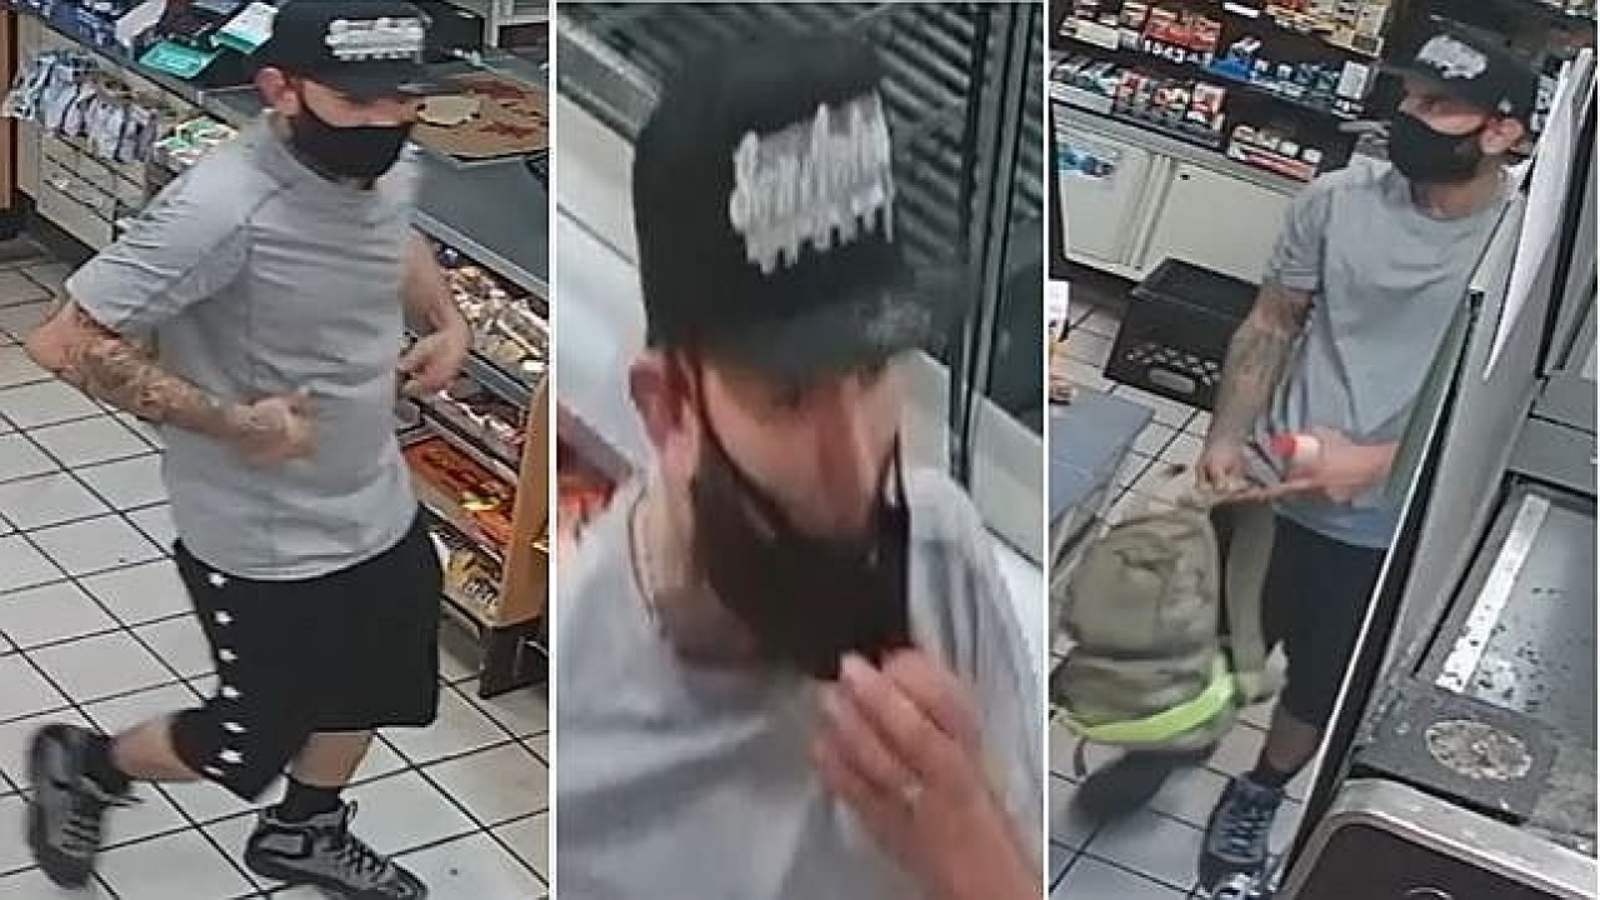 Man wielding handgun robs 7-Eleven convenience store, police say